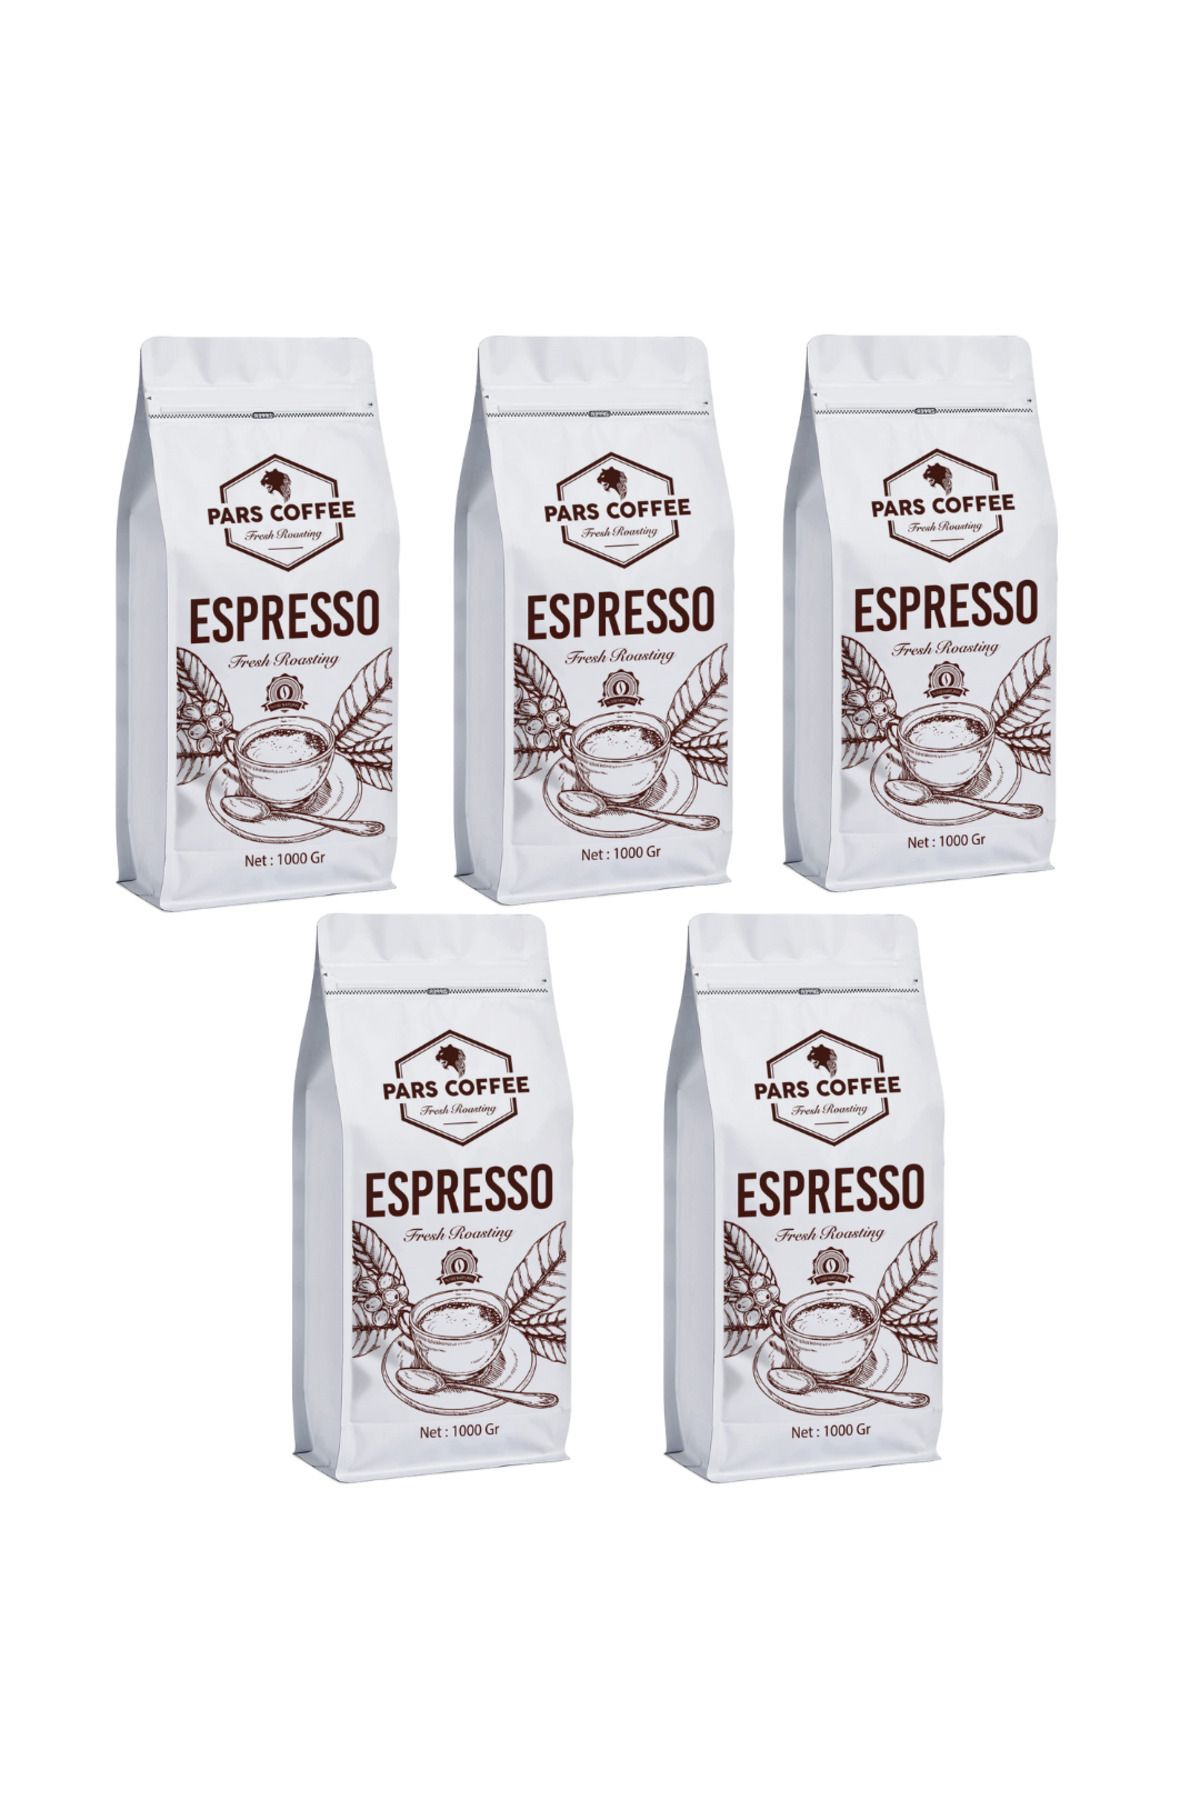 PARS COFFEE Esprresso Wild - 5 Kg - Profesional Çekirdek Kahve - Orta-koyu Kavrulmuş